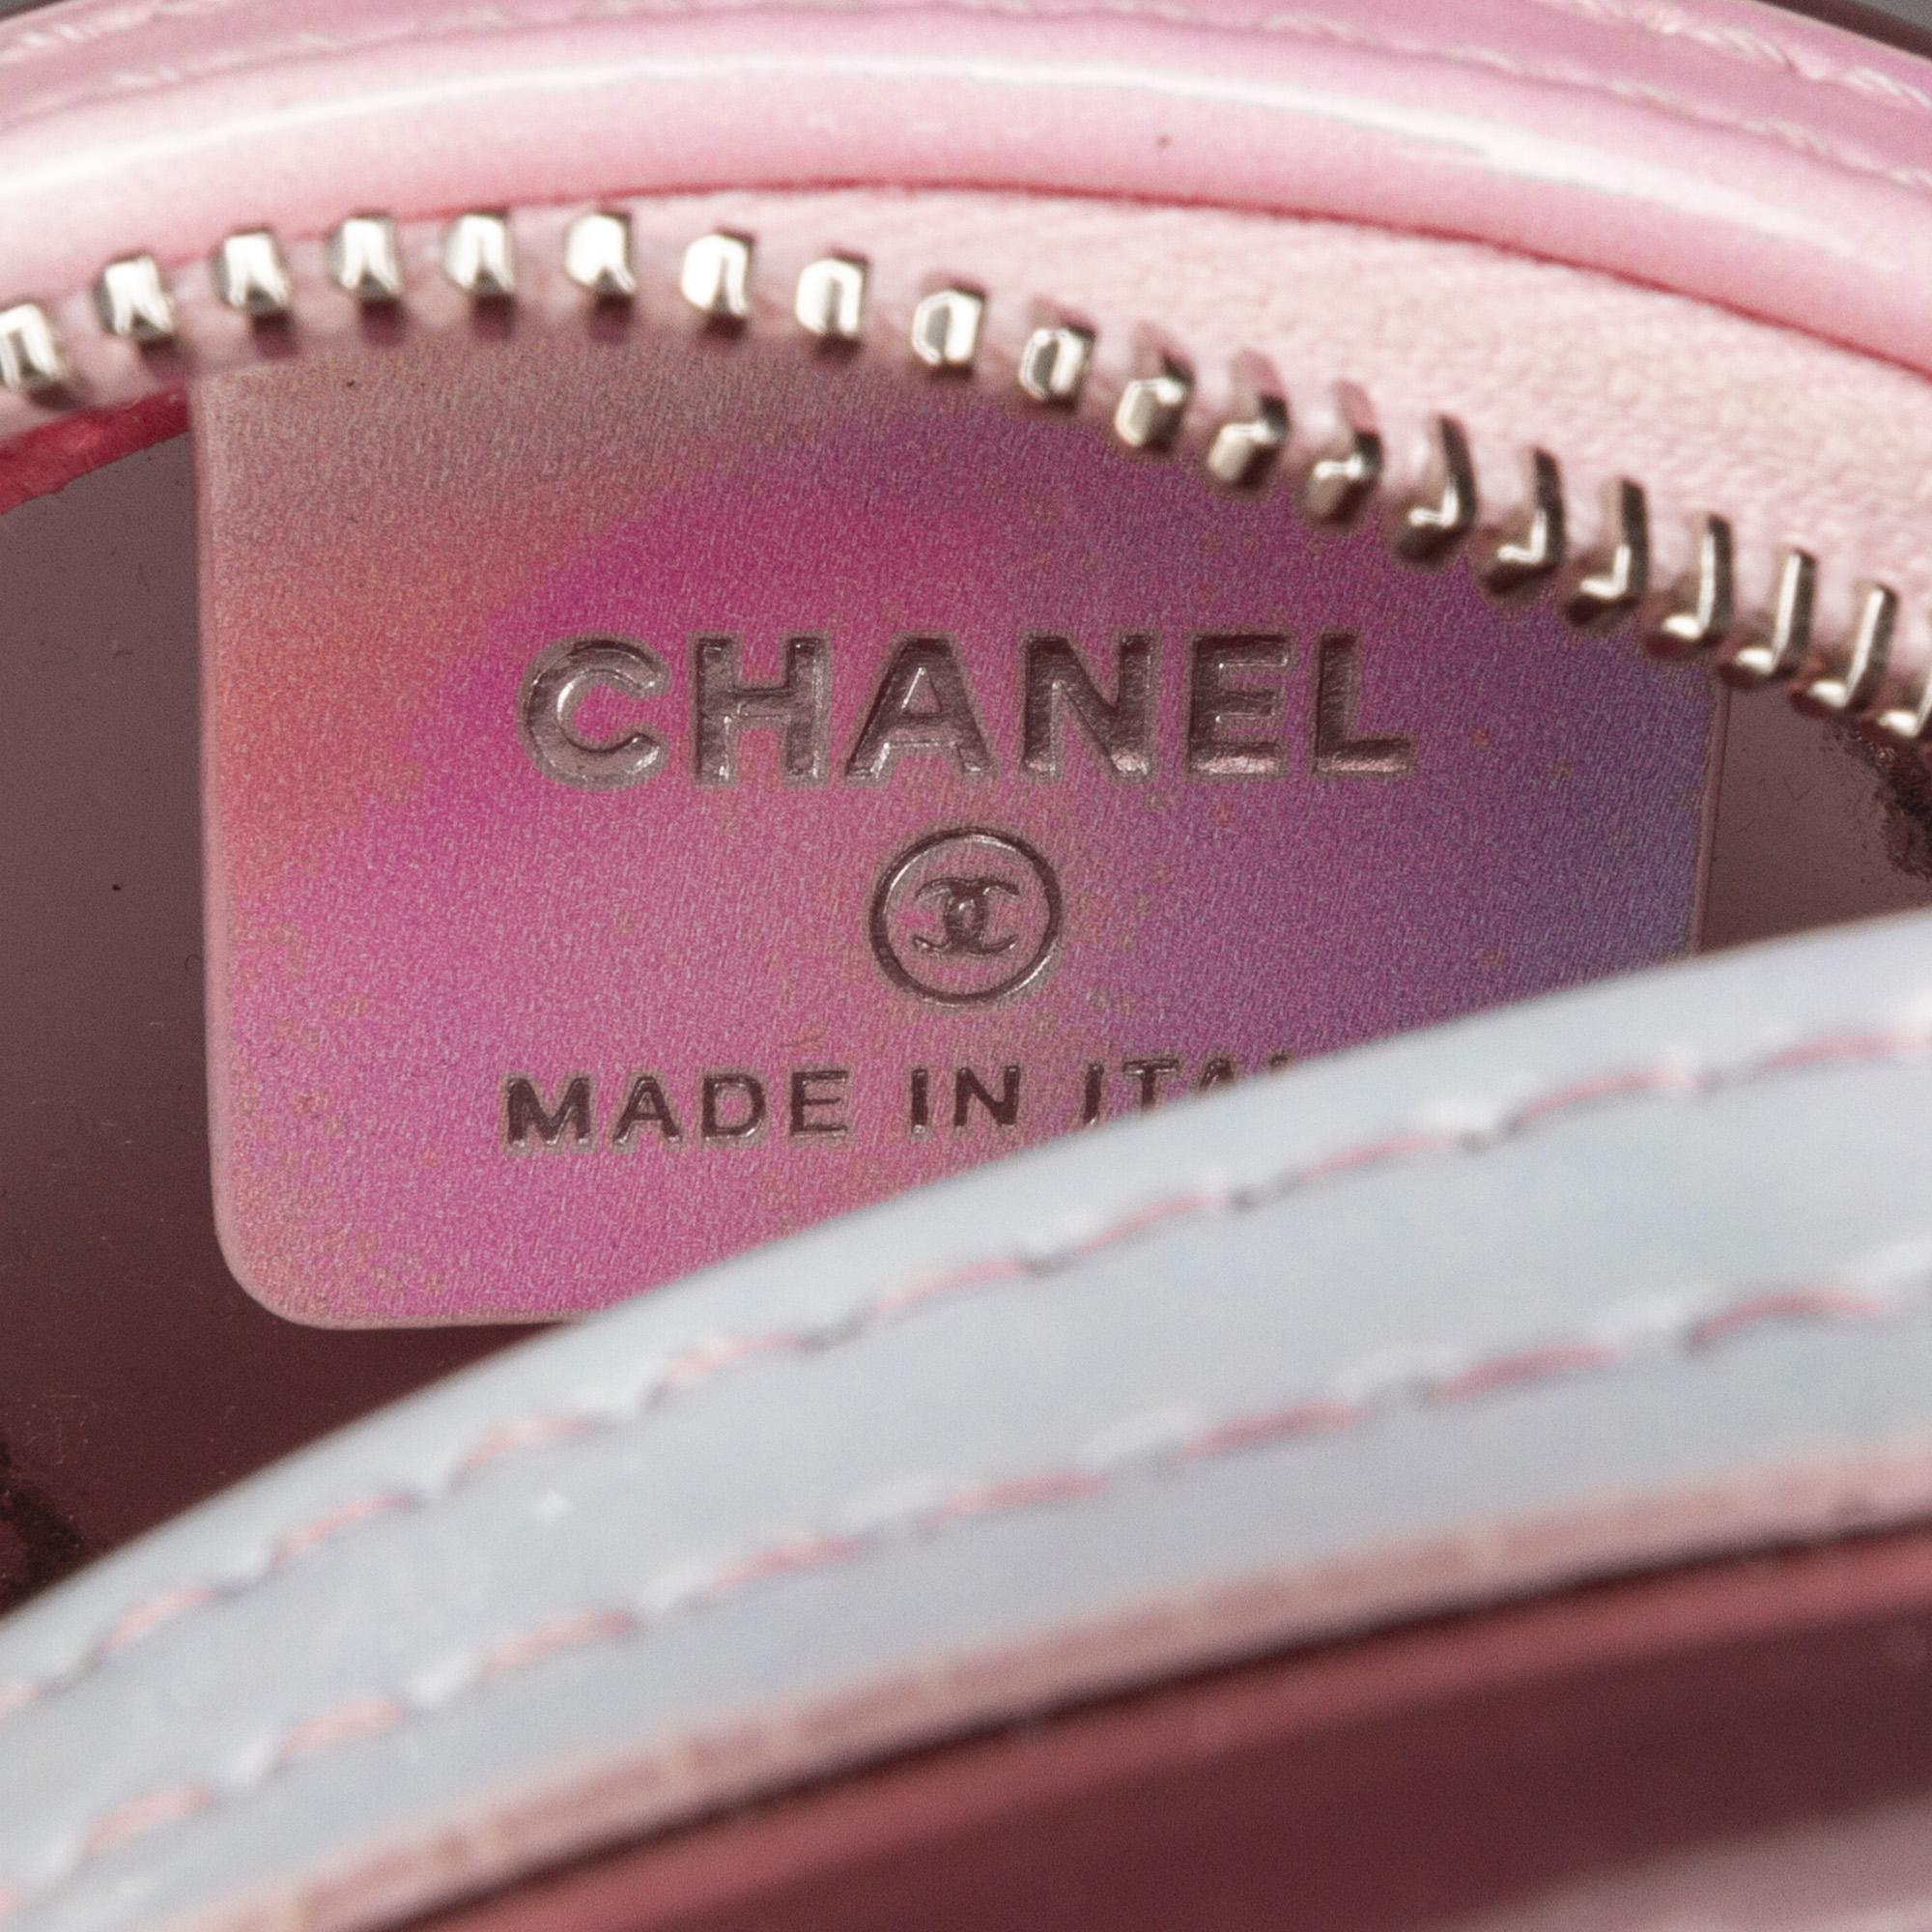 Chanel Pink/Blue CC Filigree Transparent Round Crossbody Bag